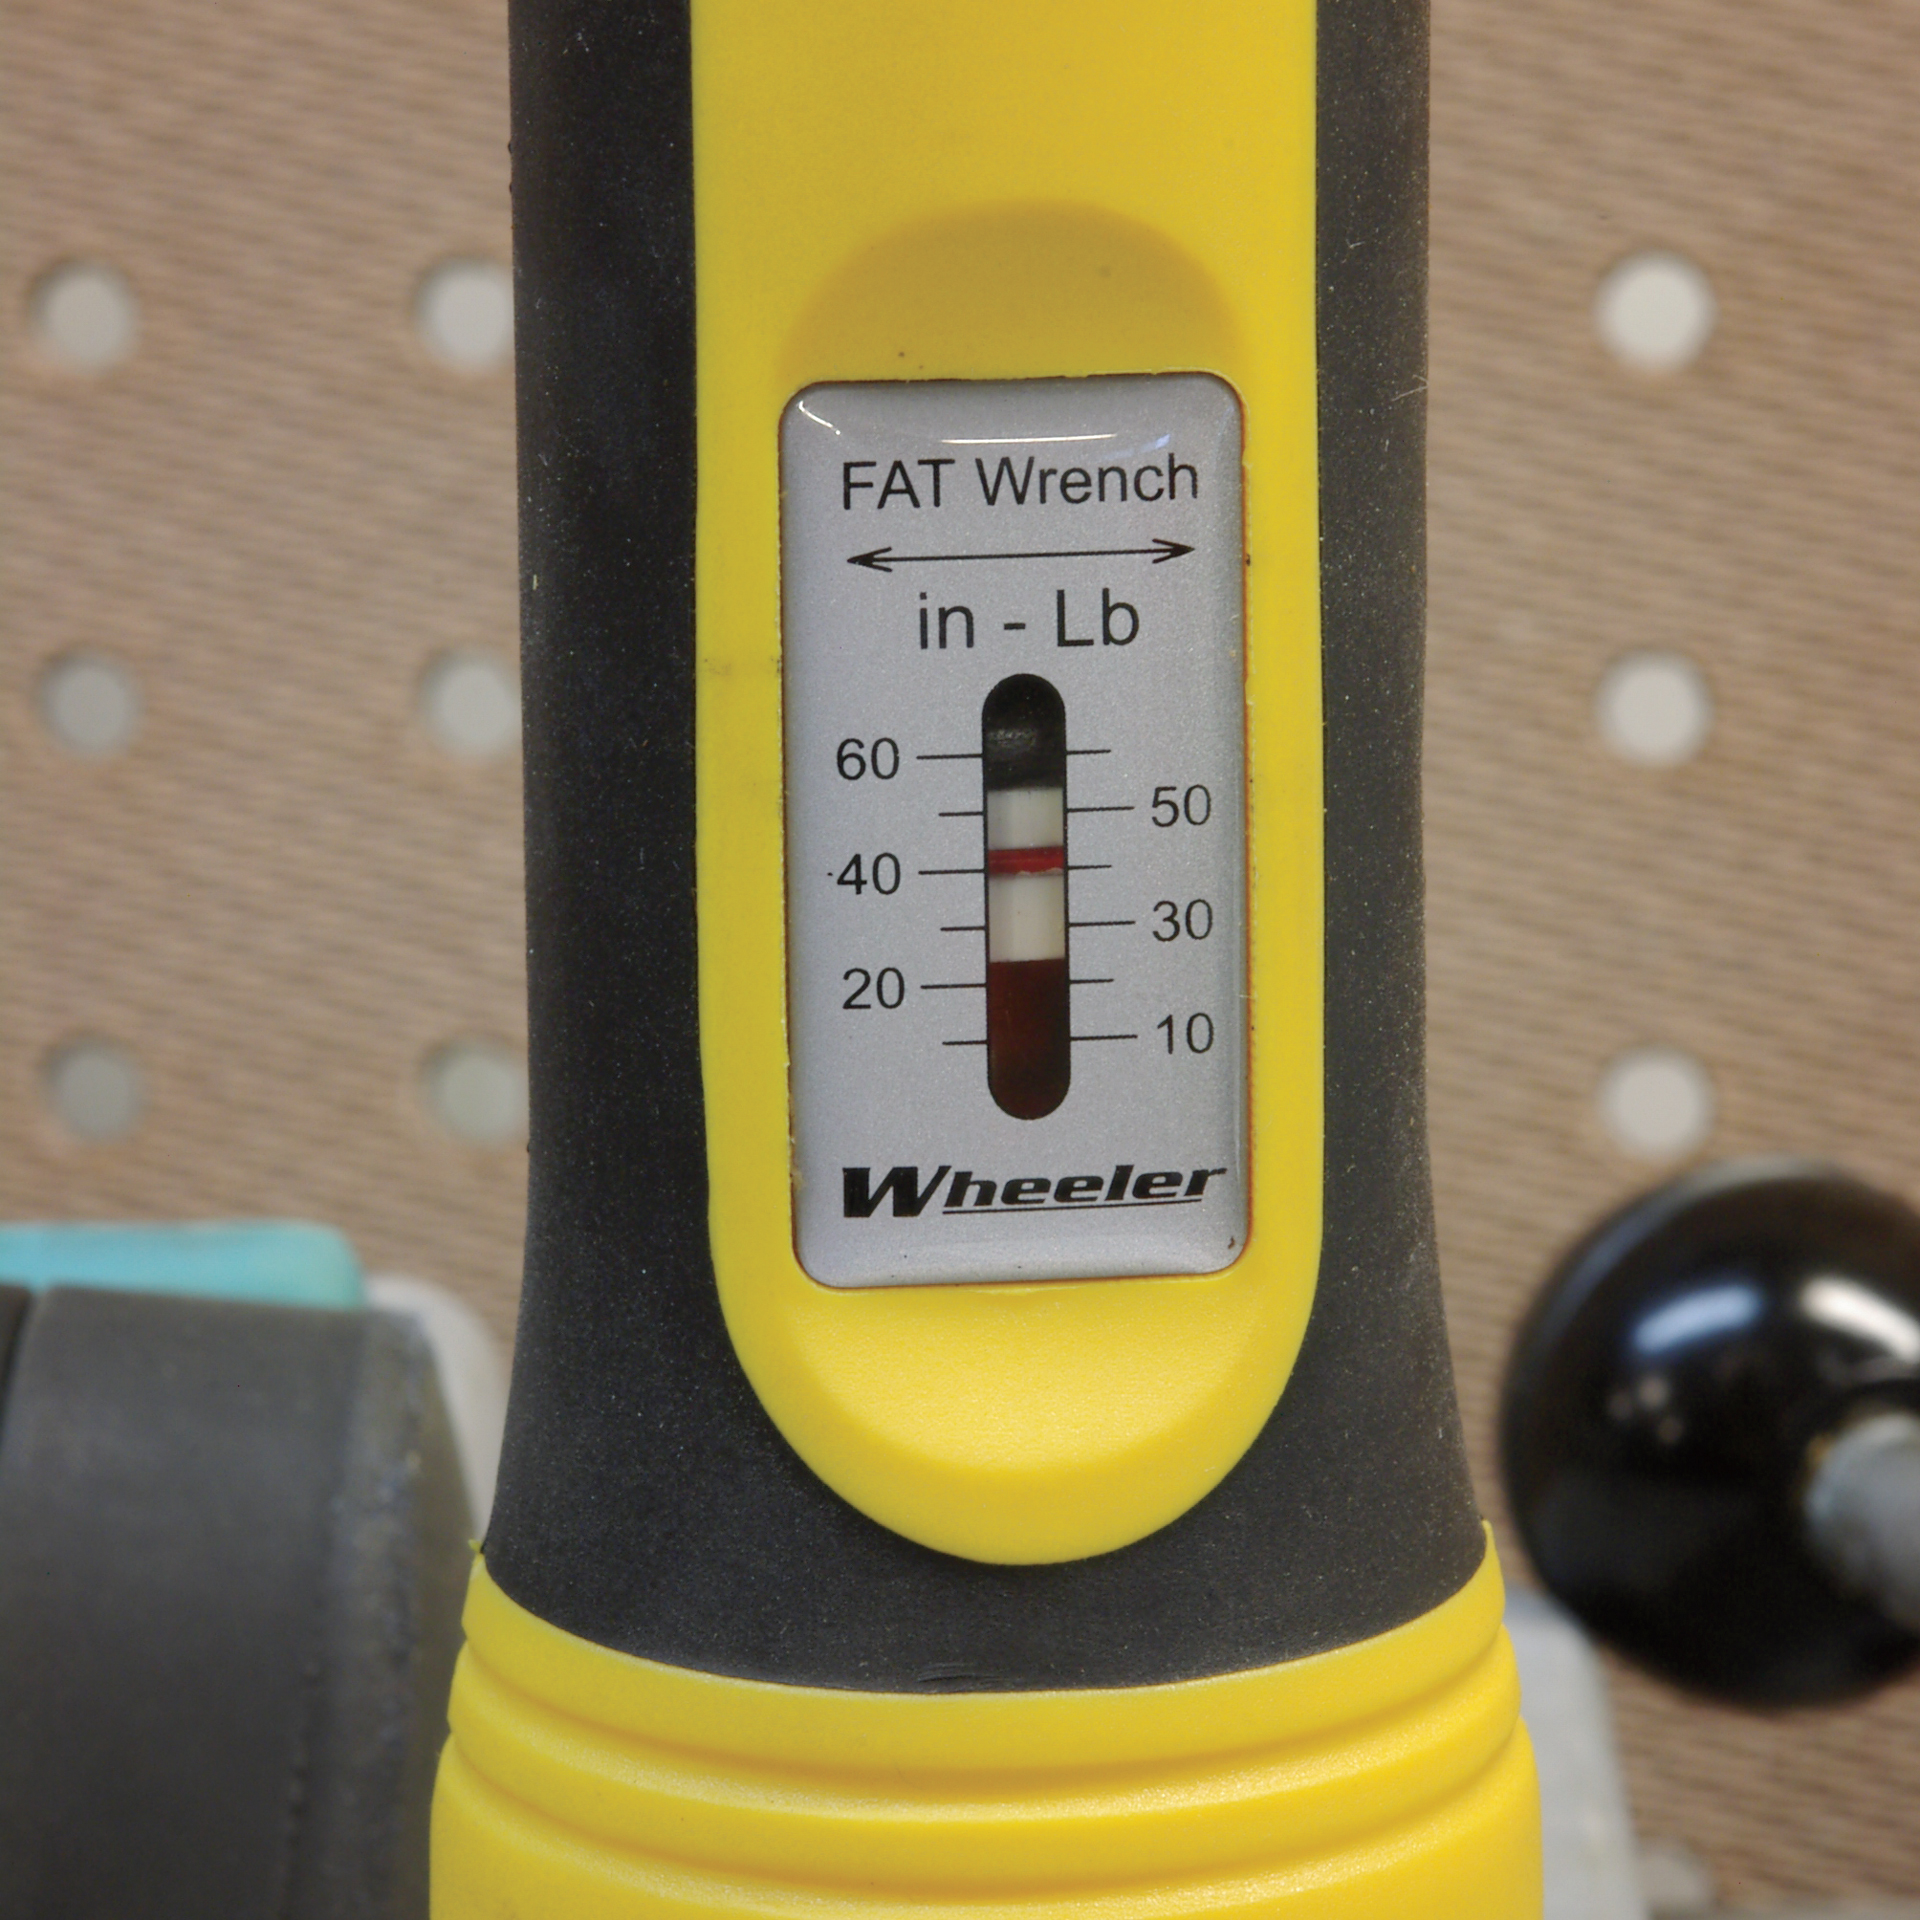 Wheeler FAT Wrench gauge in-lb